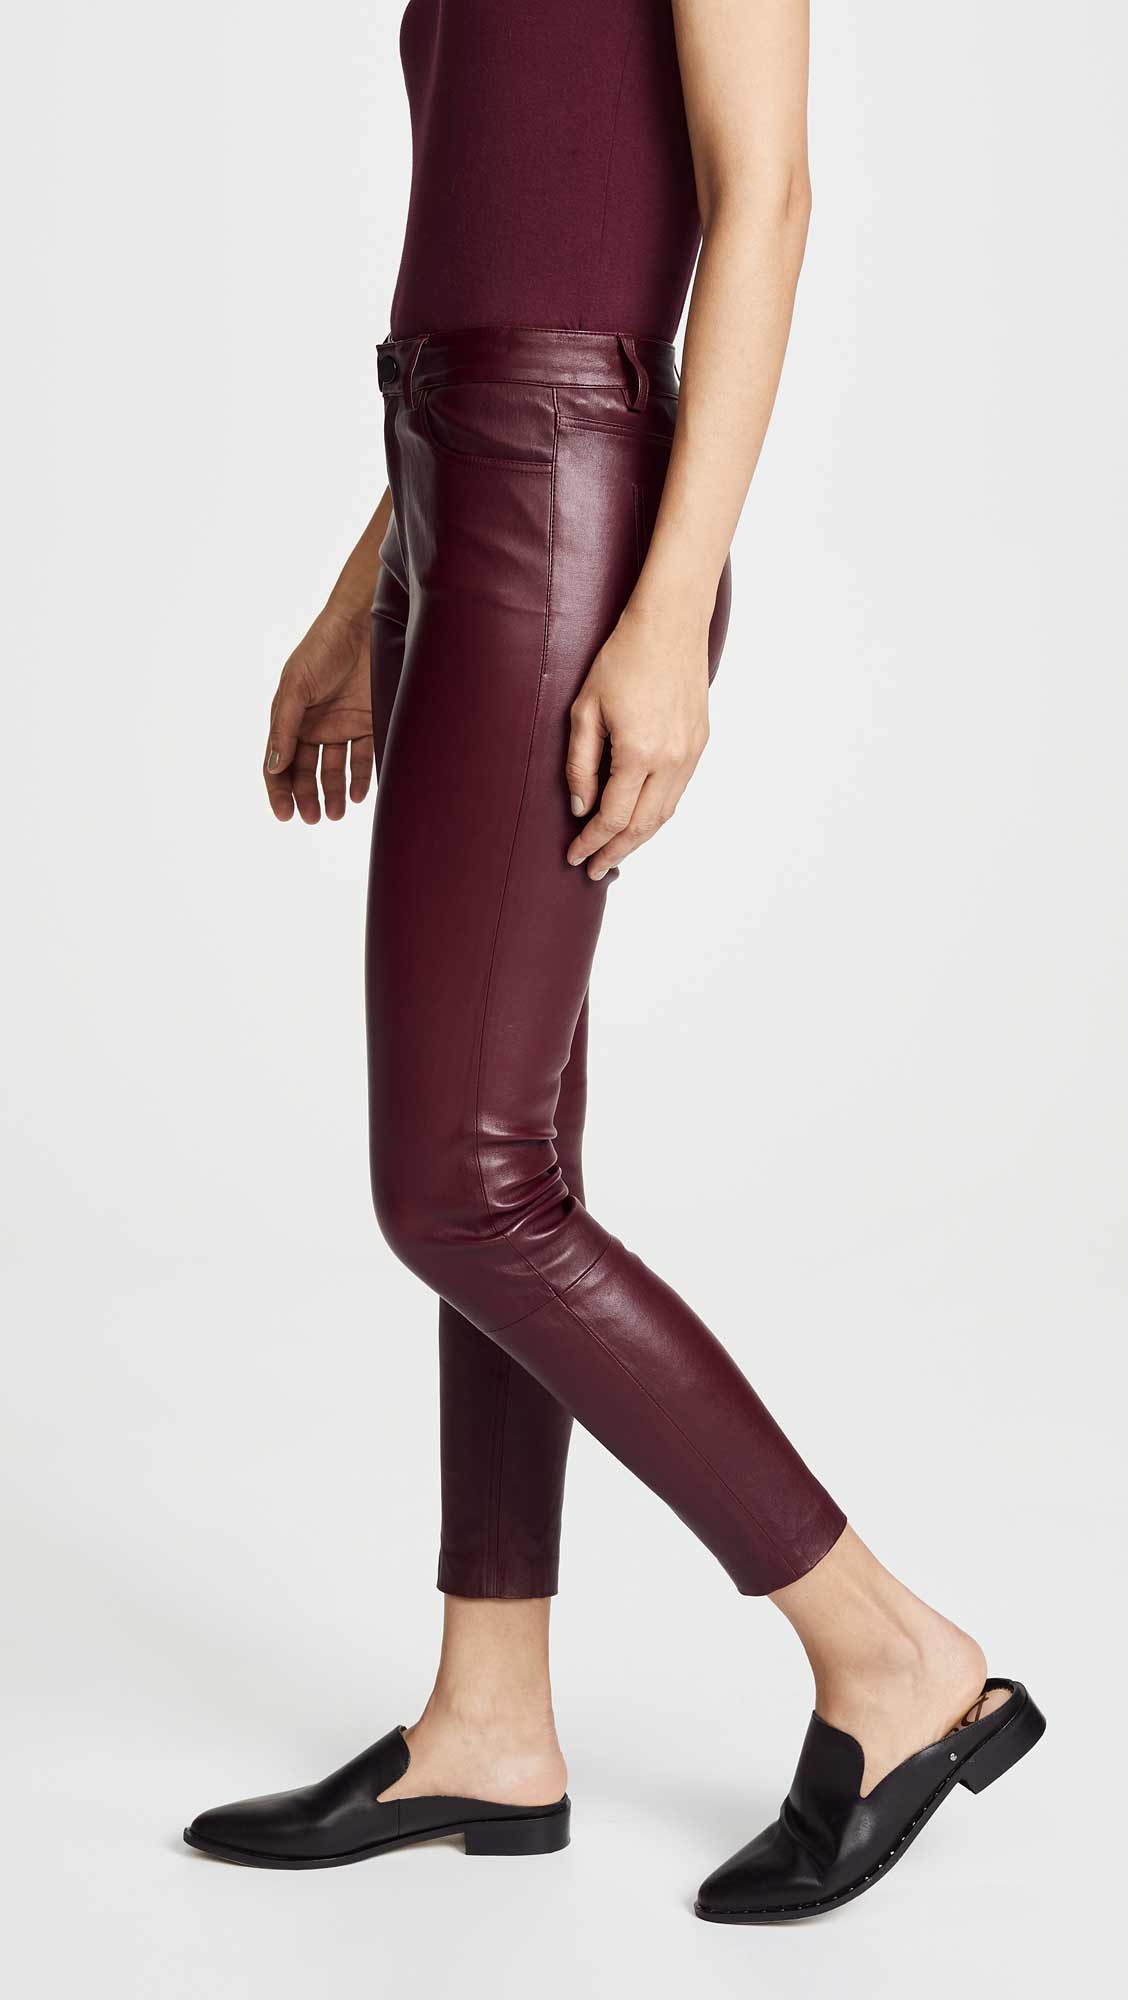 Burgundy leather pants  preppyfashionistcom